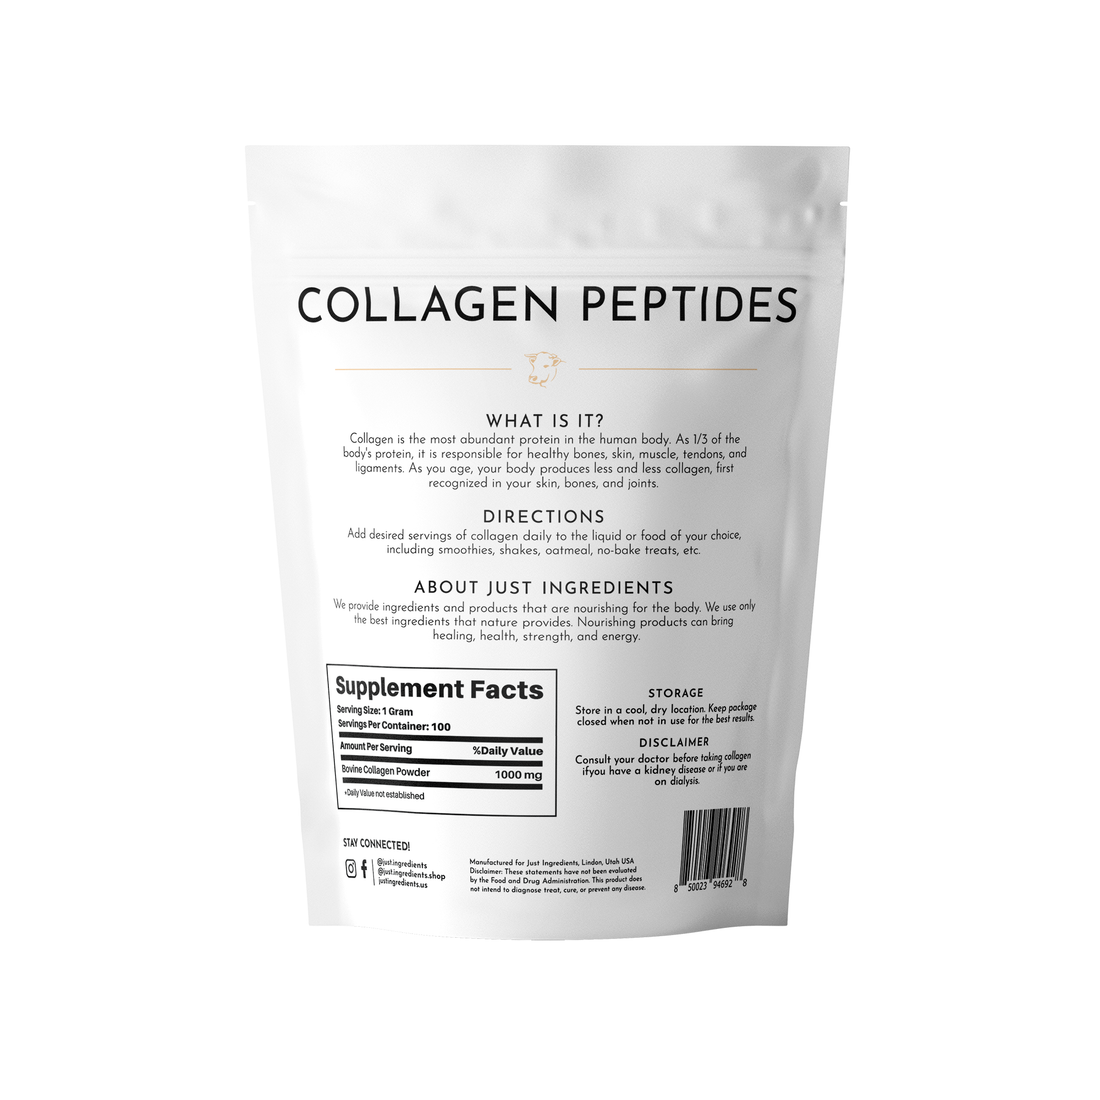 Collagen Peptides (Bovine)